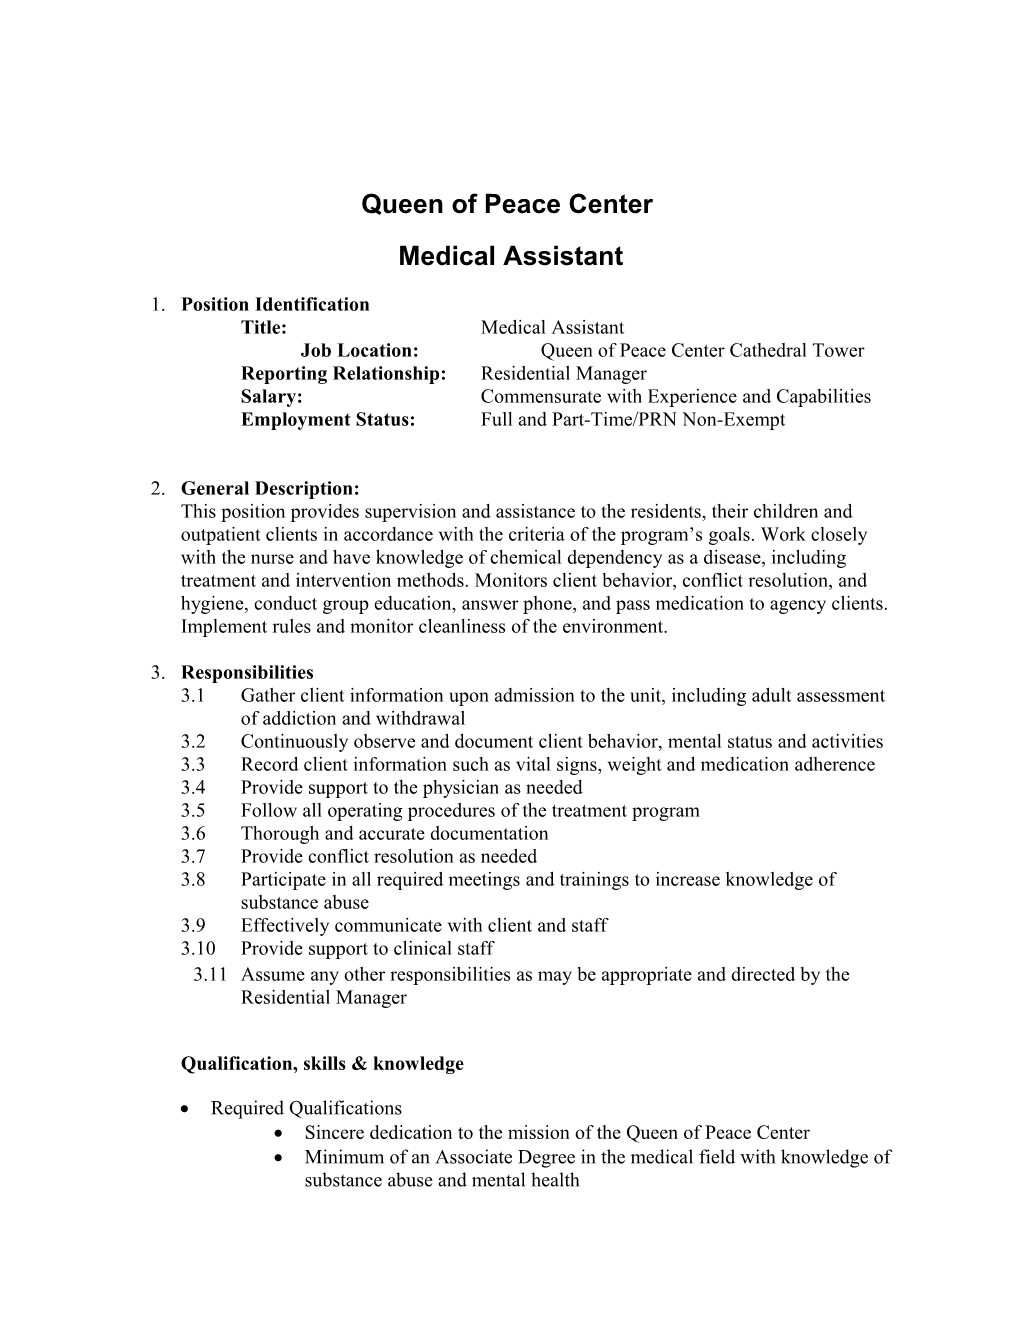 Queen of Peace Center